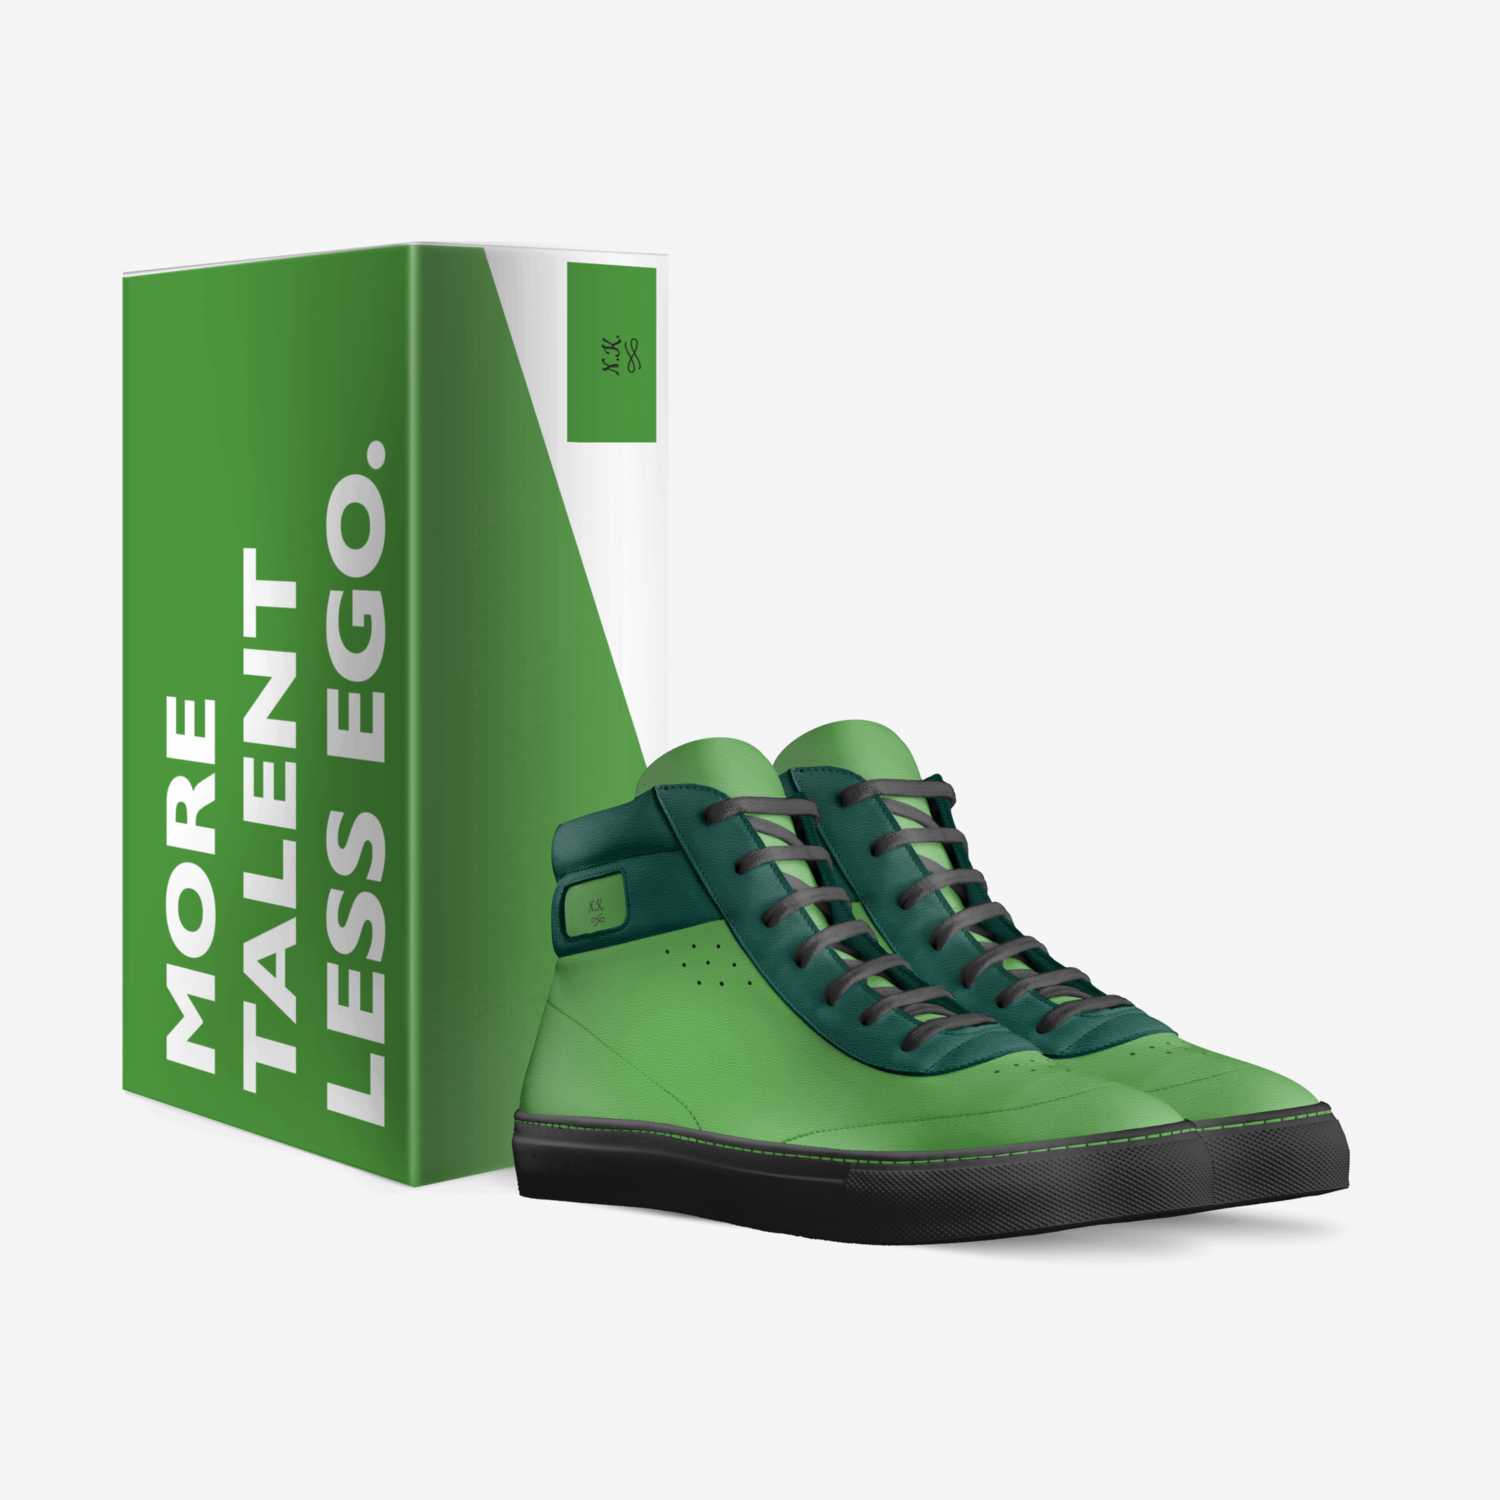 N.K. custom made in Italy shoes by Nicholas Kremidas | Box view